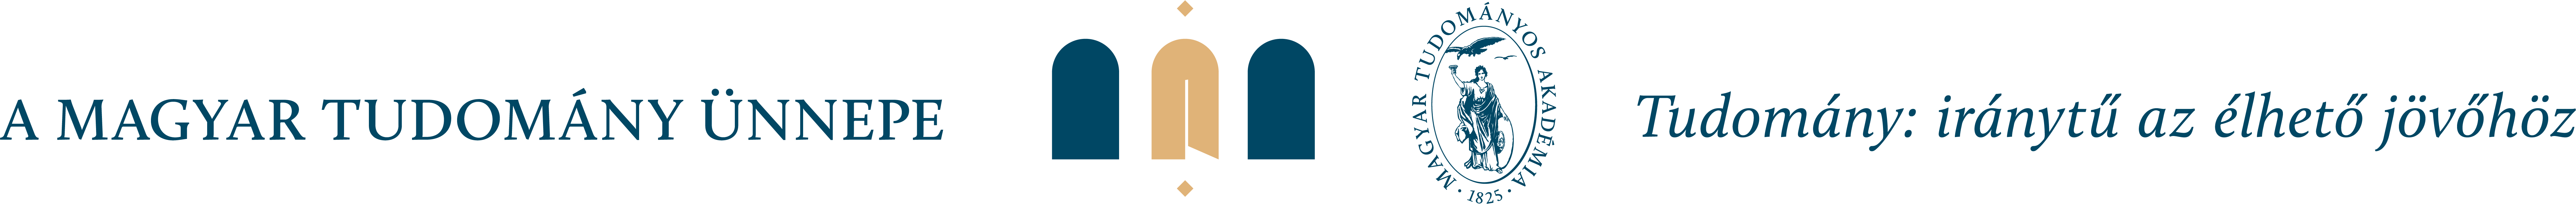 MTÜ logó 2021